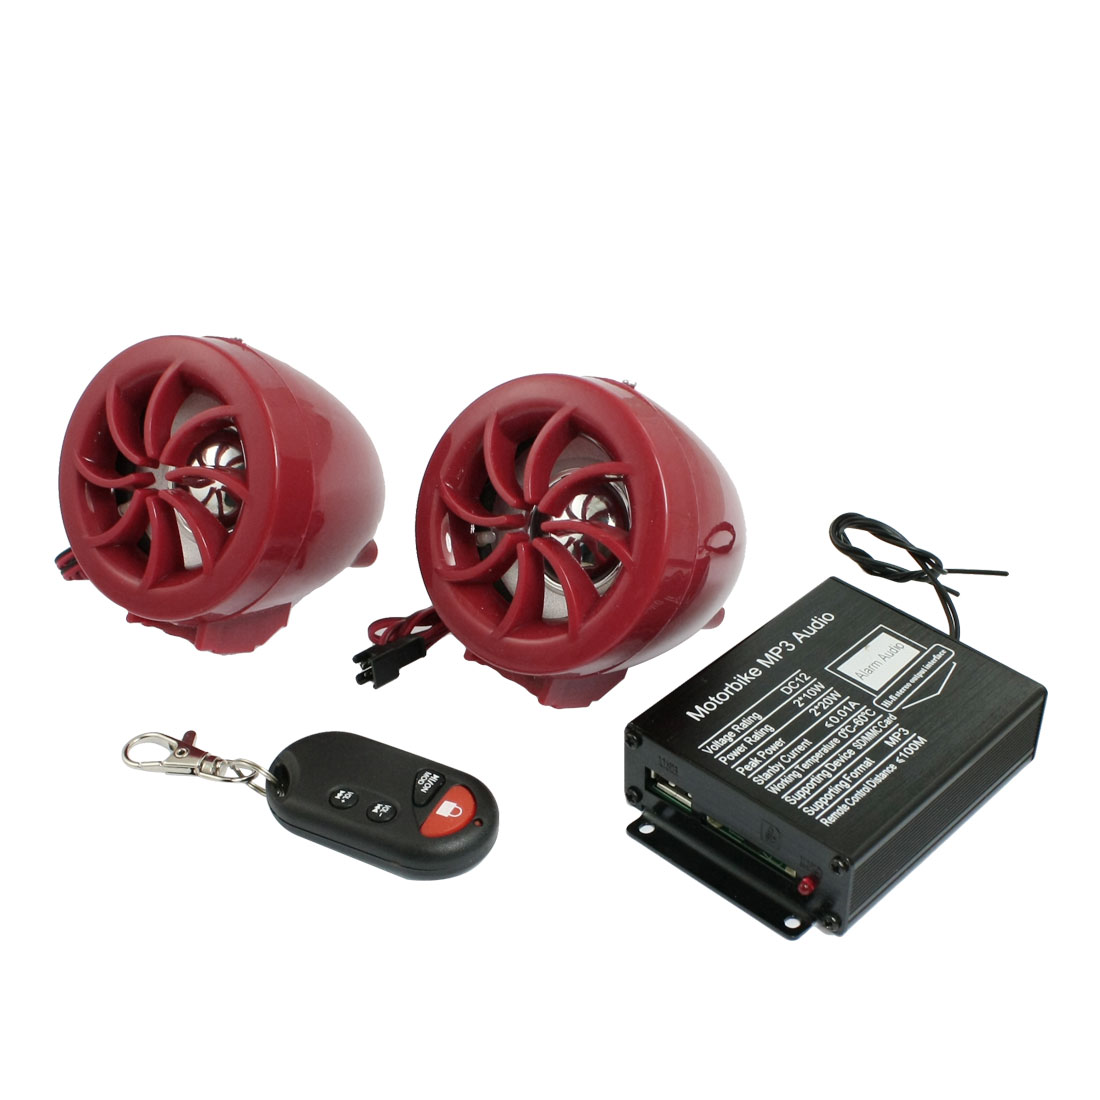 Unique Bargains a13031200ux0288 Red Plastic ATV Motorcycle Mount MP3 Audio Amplifier Stereo Sound Speakers 2 Pcs